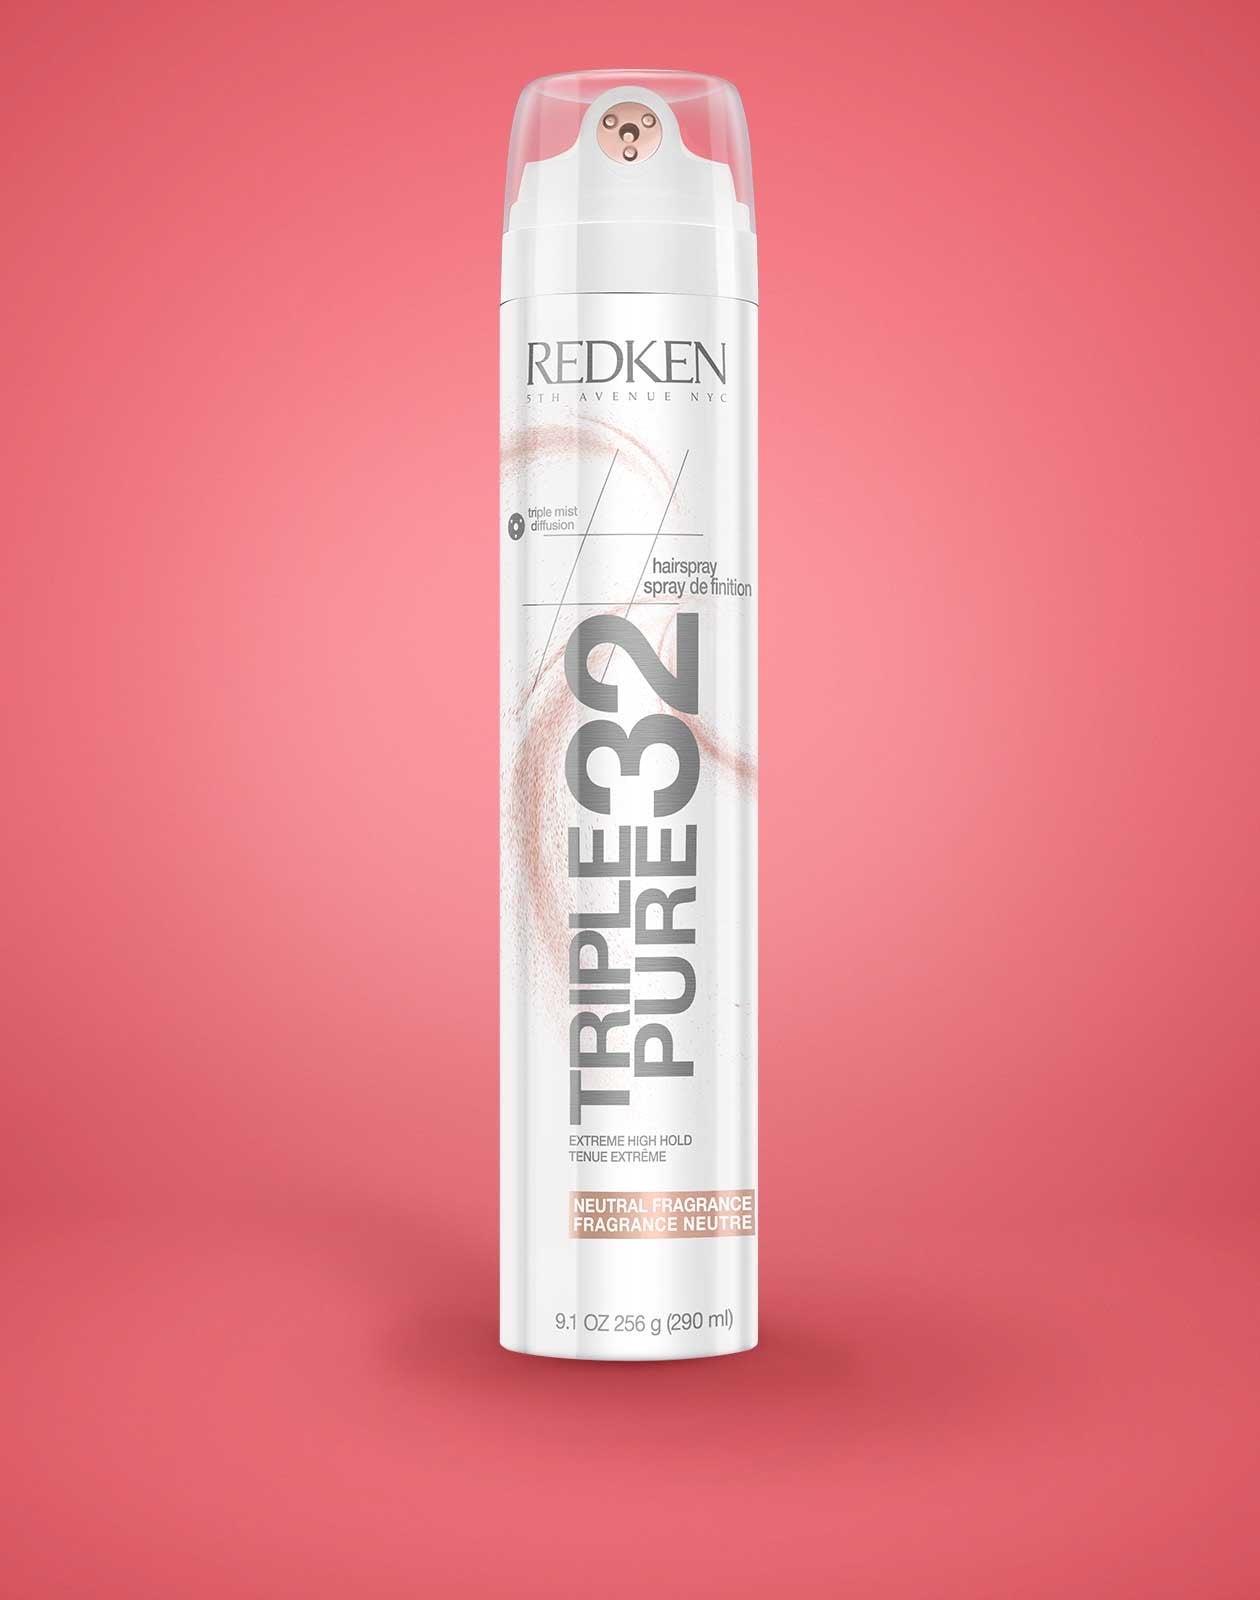 triple pure 32 neutral fragrance high hold hairspray